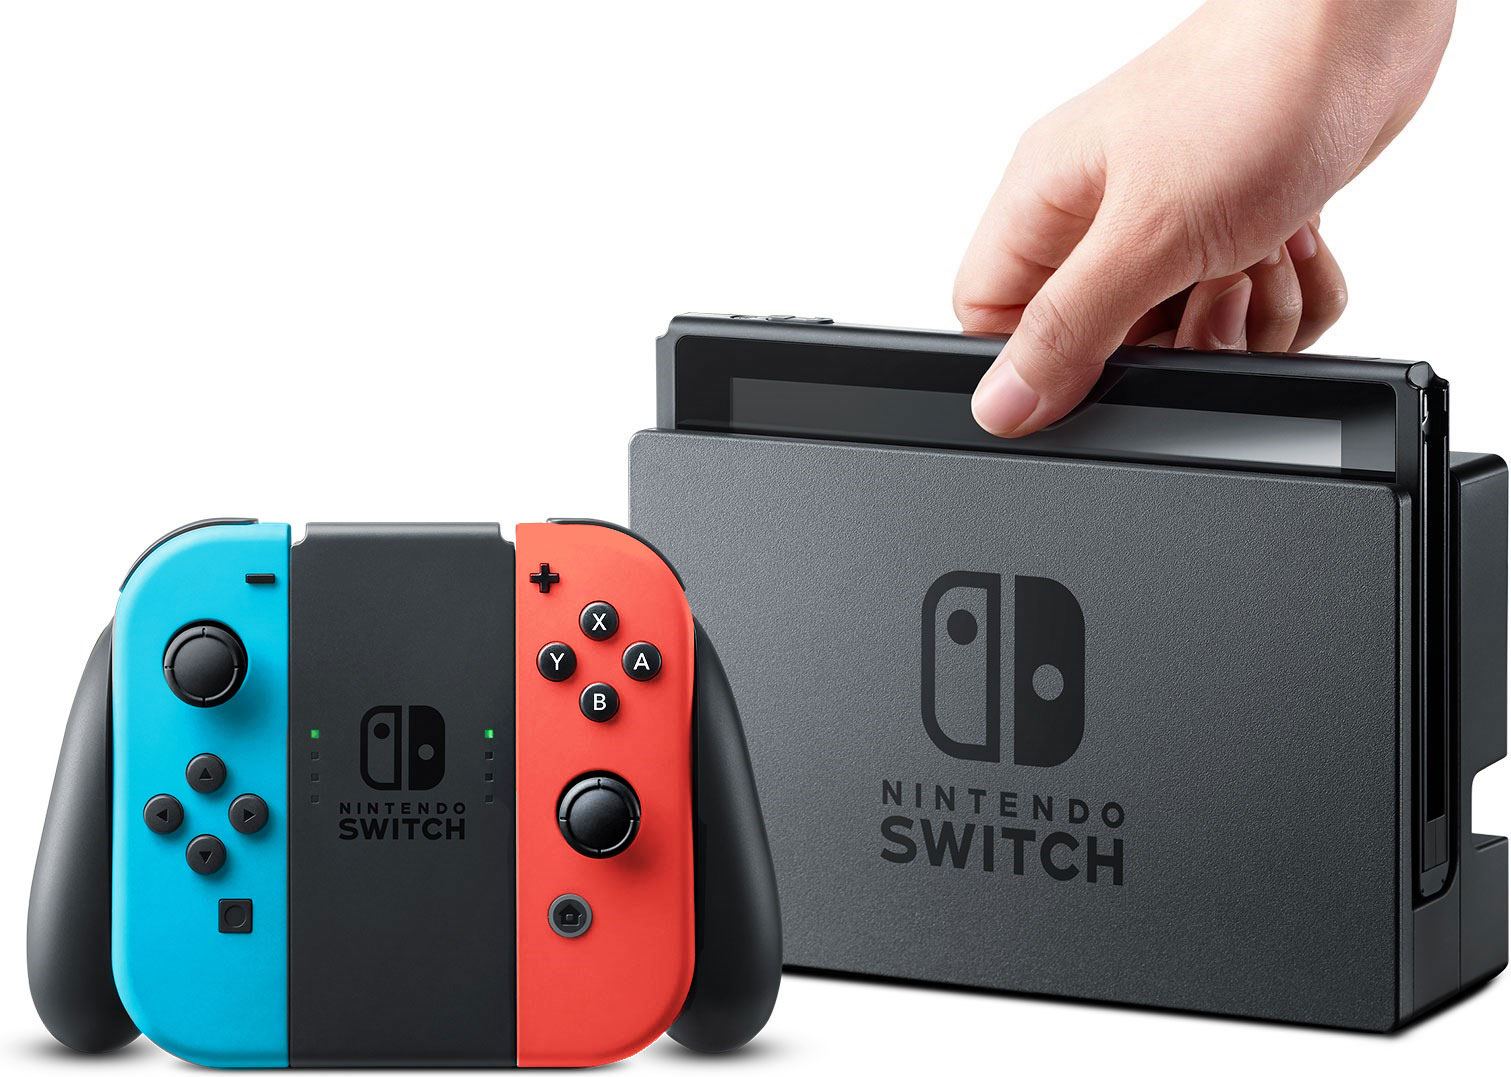 Последний nintendo switch. Приставка Нинтендо свитч. Игровая приставка Nintendo Switch. Nintendo Switch Rev 2. Приставка Nintendo Switch консоль.